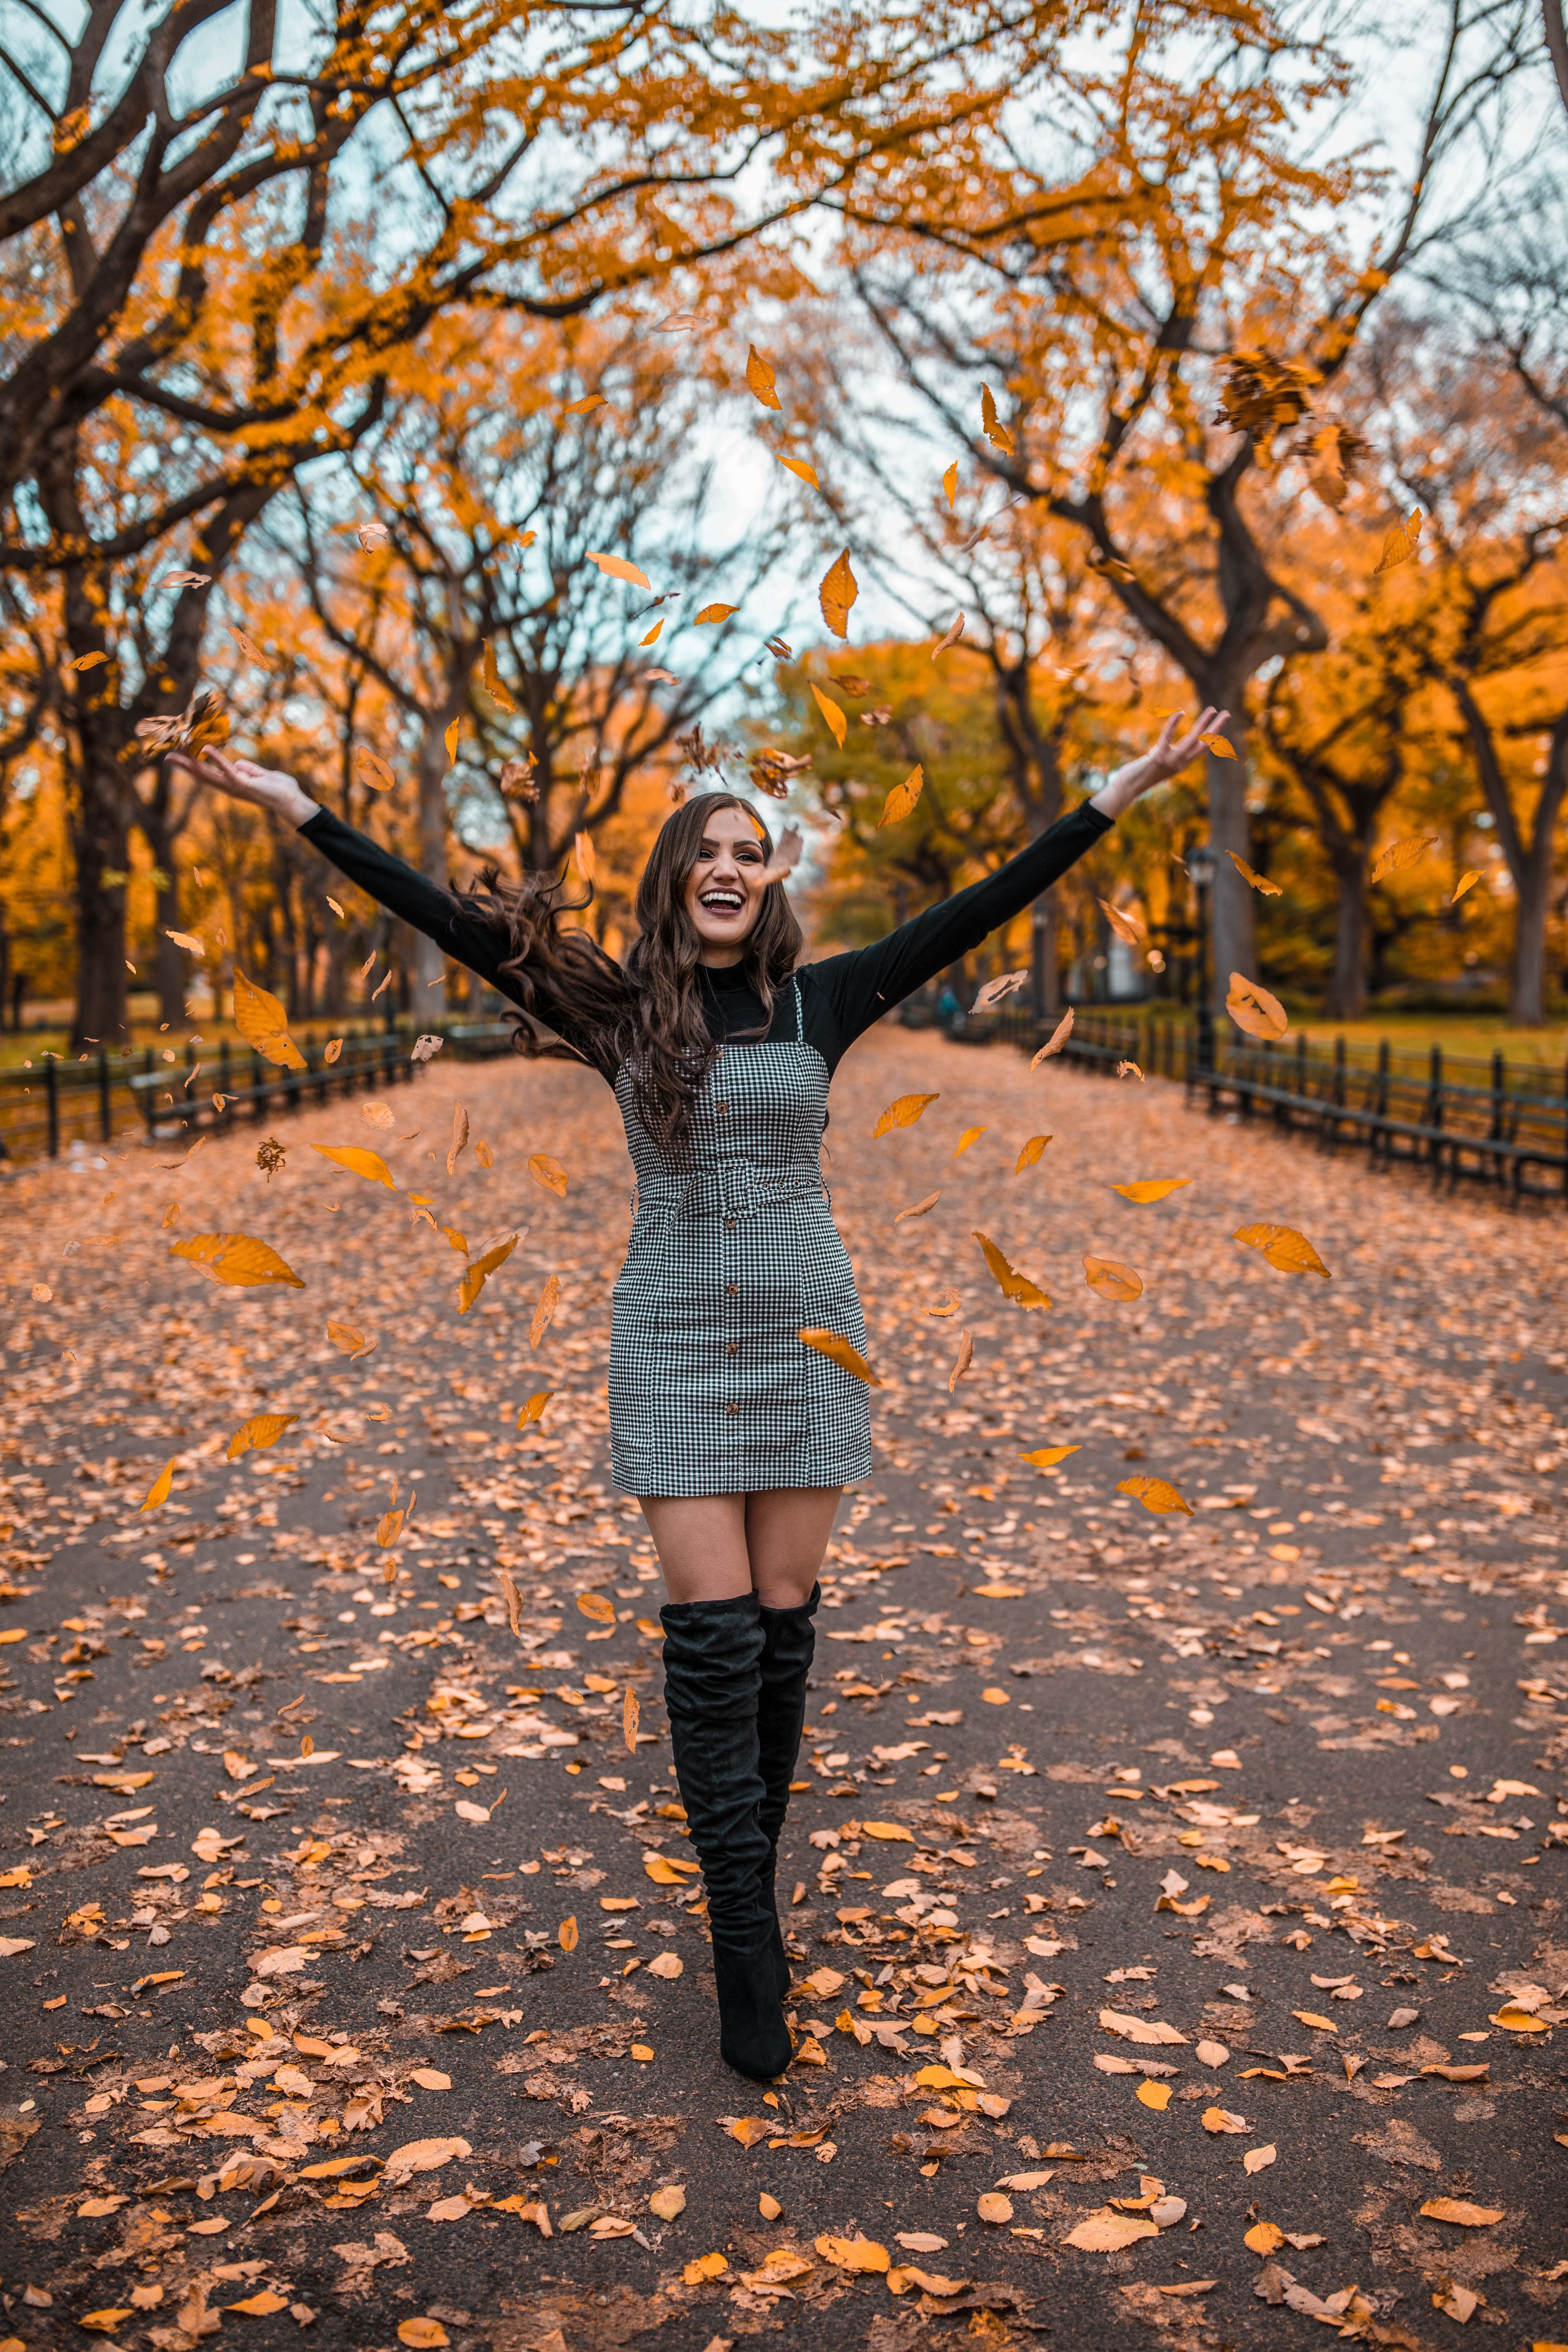 Fall leaves photoshoot ideas in New York City -   18 beauty Fashion ideas